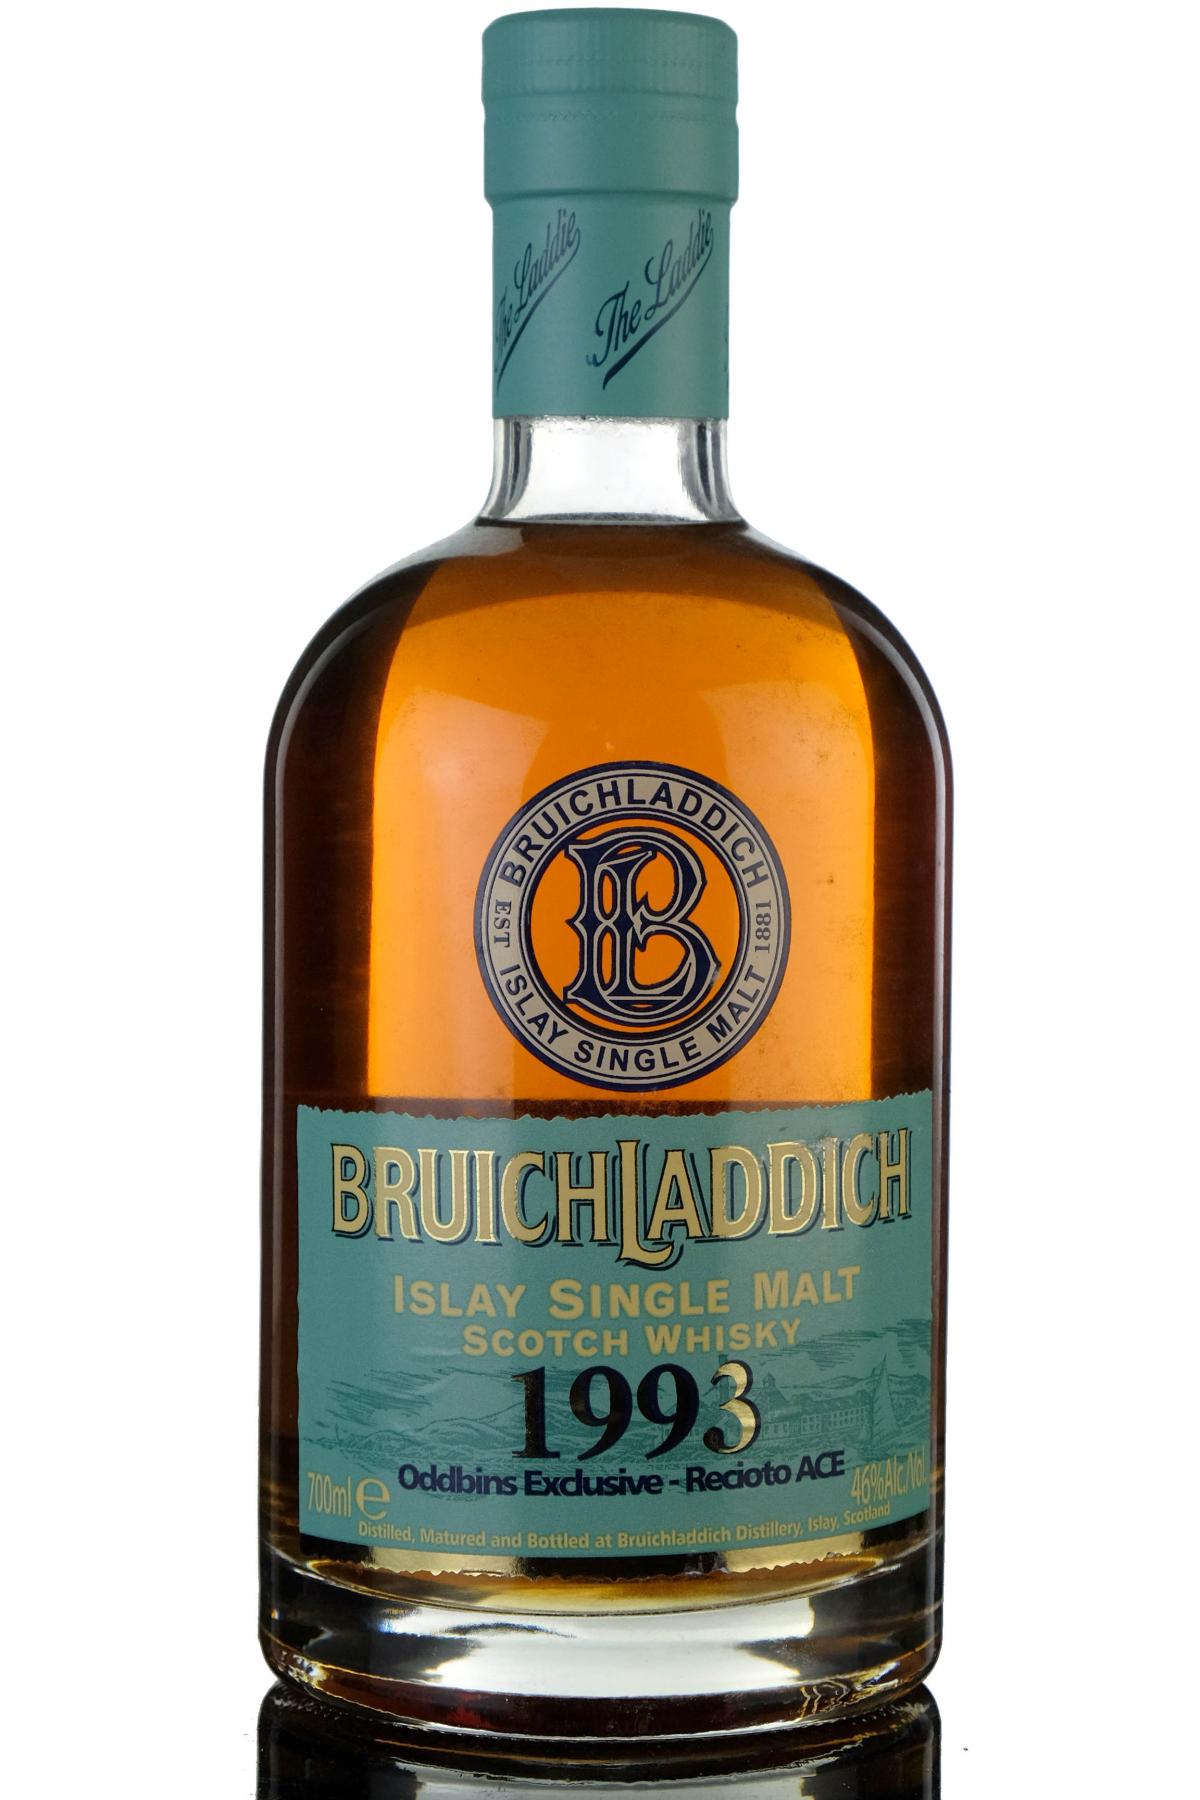 Bruichladdich 1993 - Oddbins Exclusive - Recioto ACE